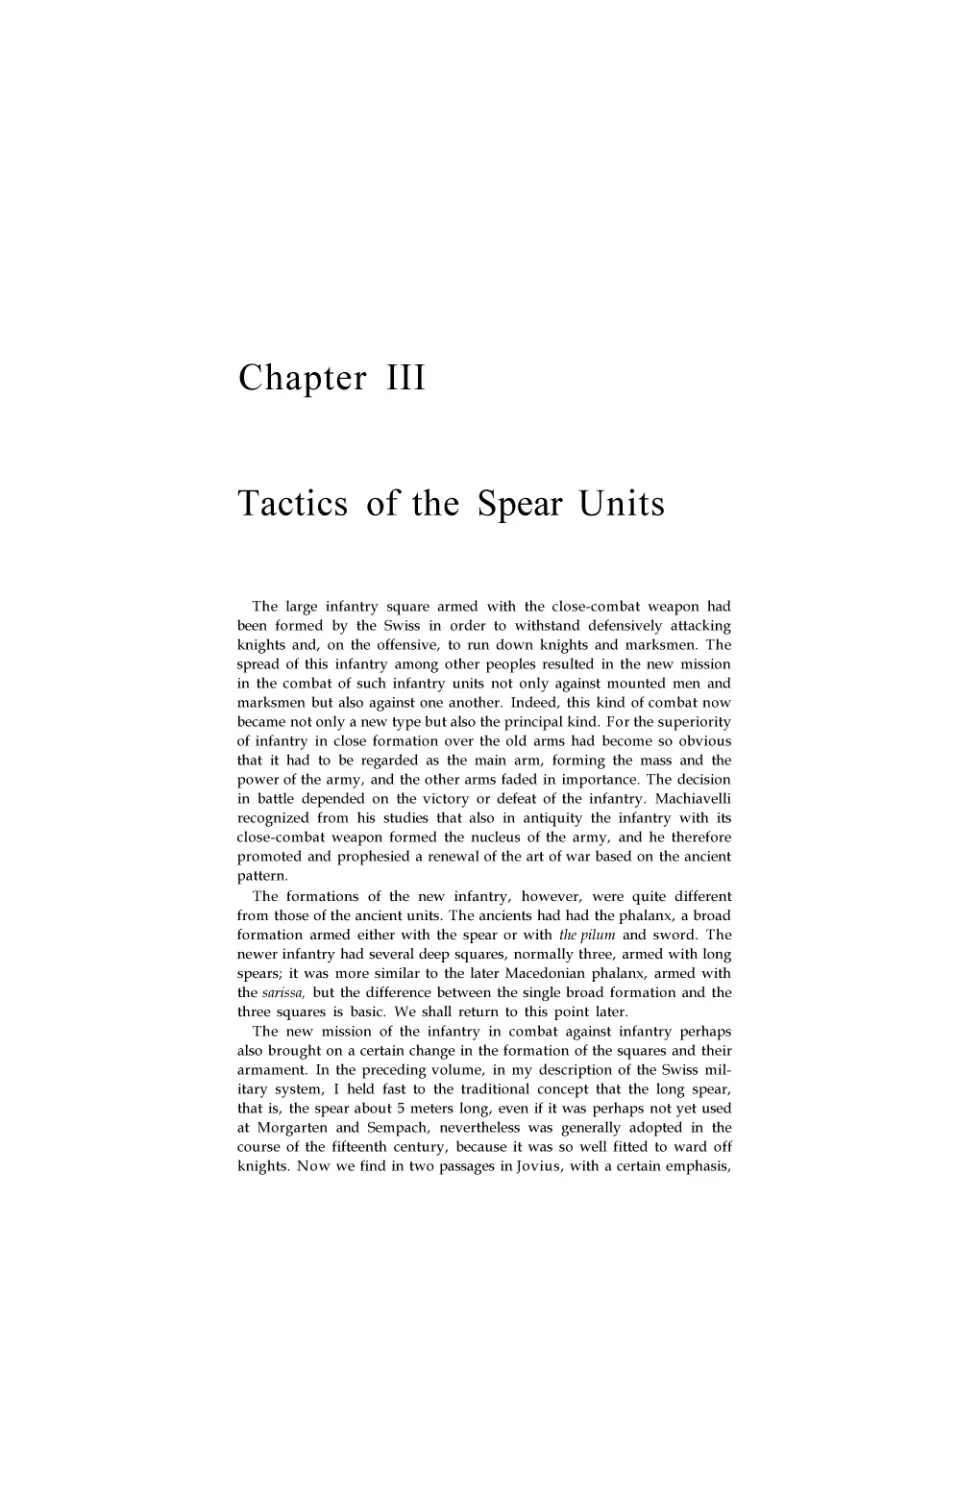 Tactics of the Spear Units